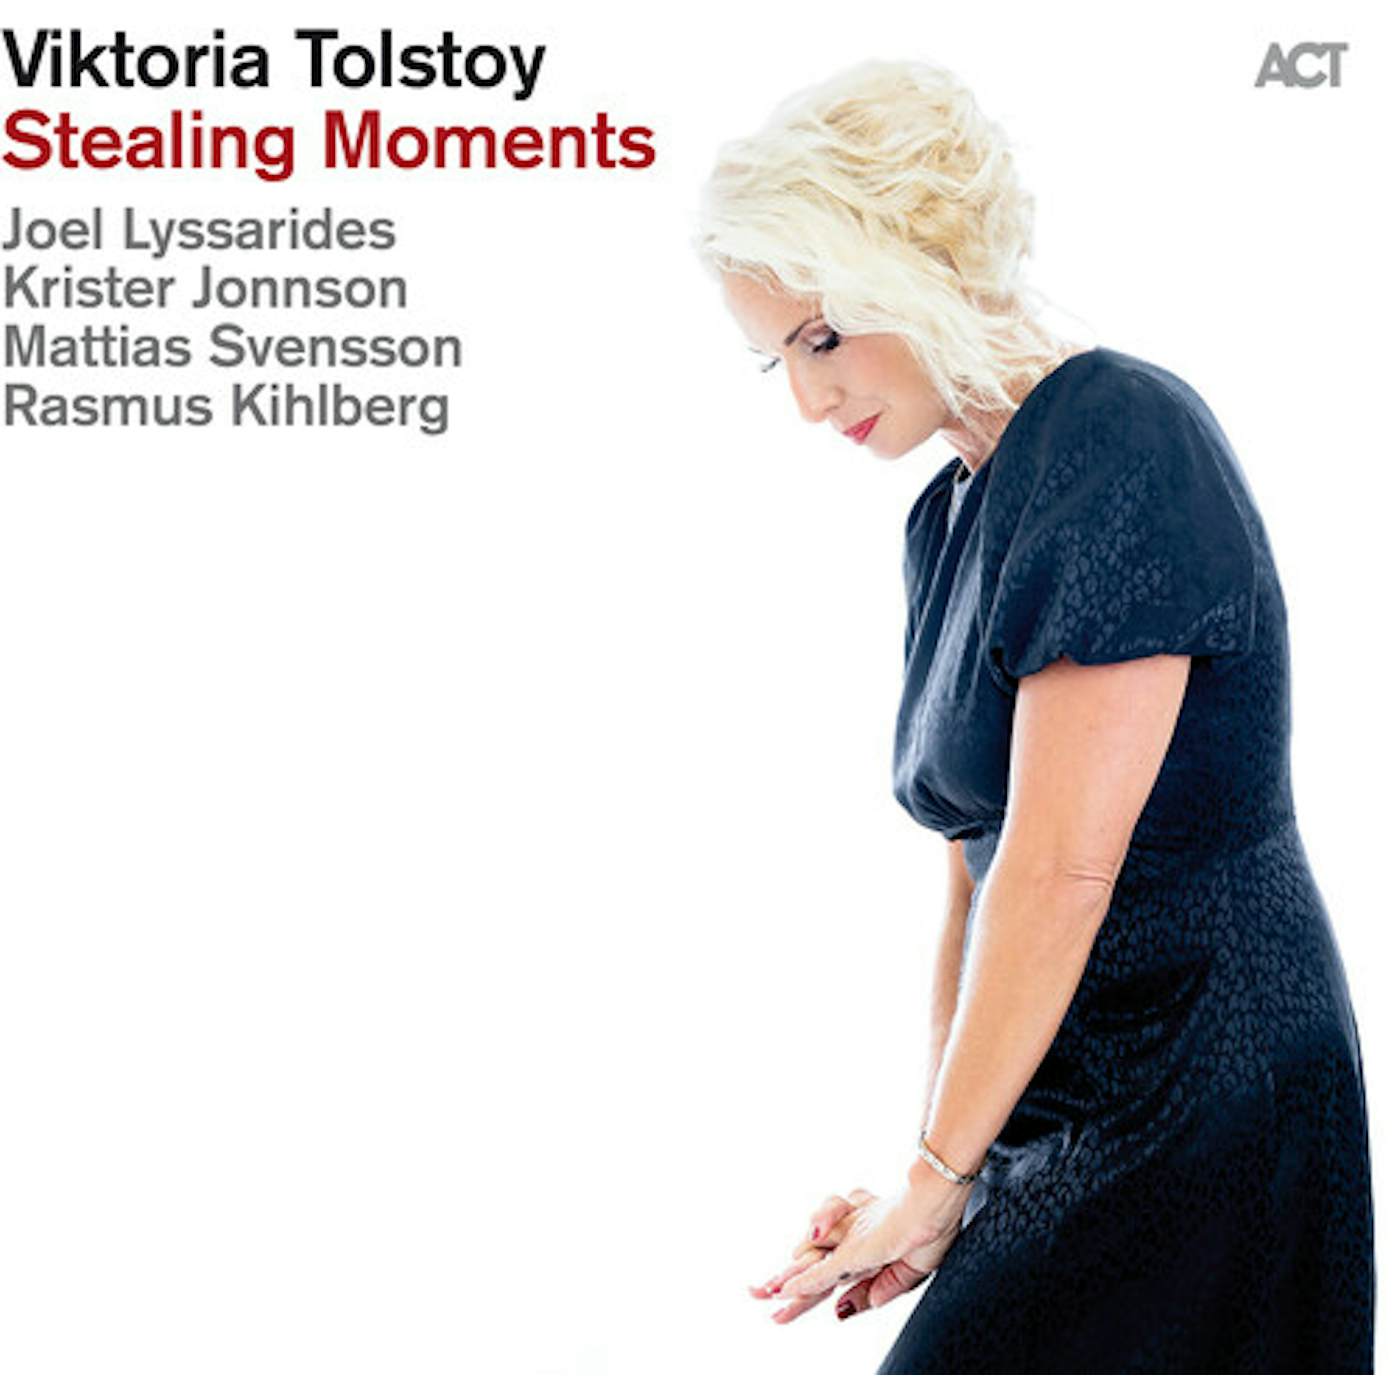 Viktoria Tolstoy STEALING MOMENTS CD